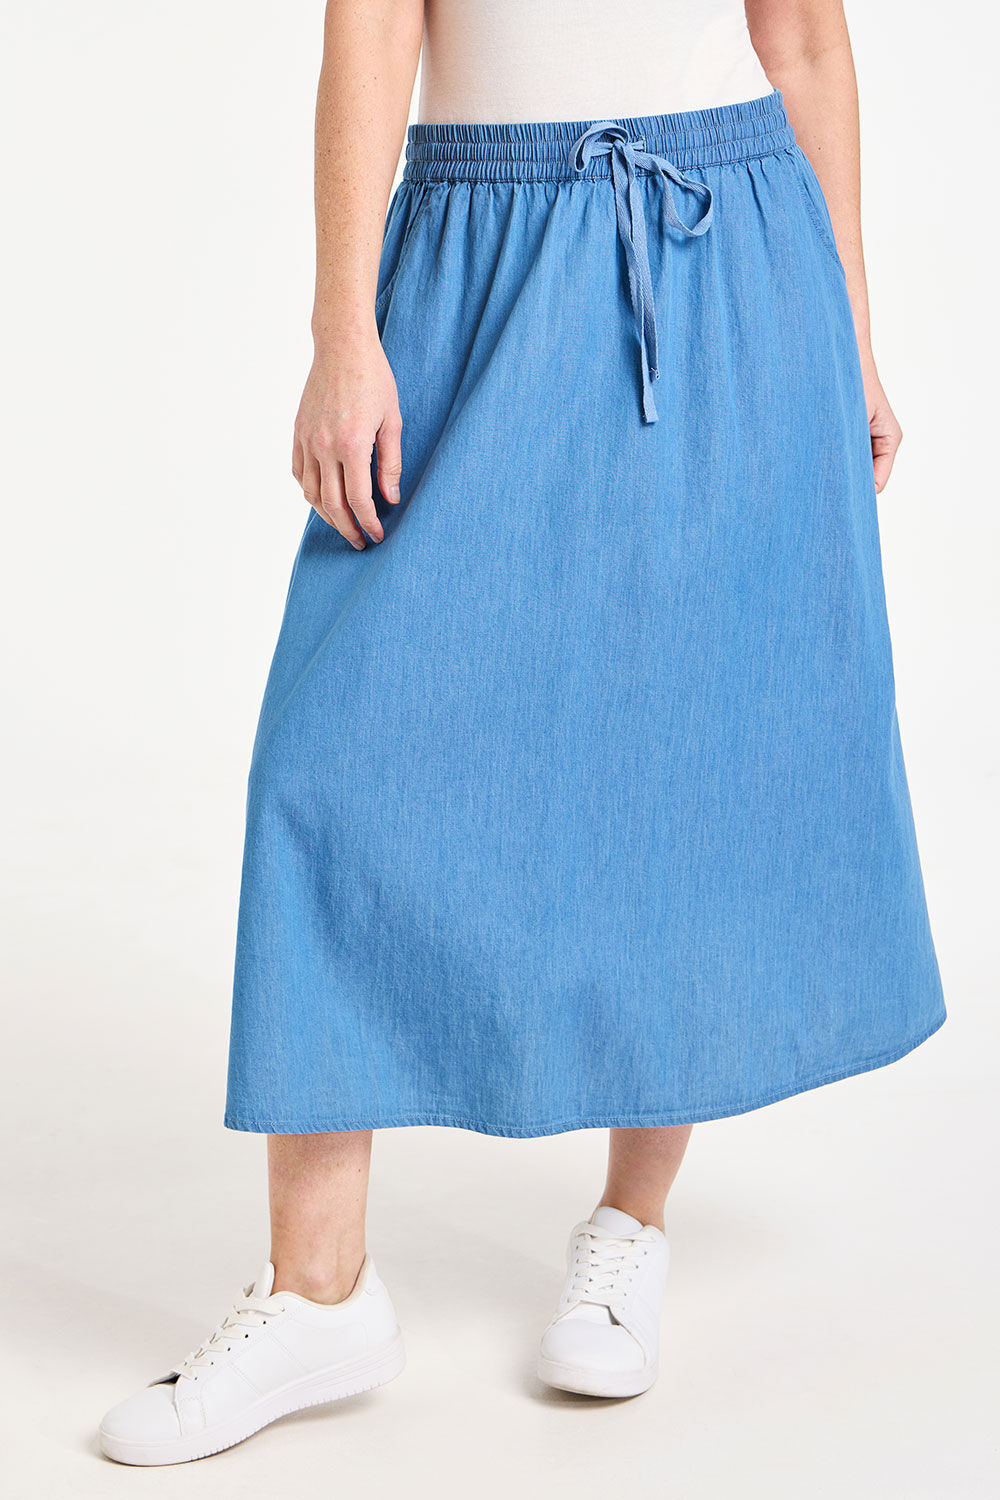 Bonmarche Pale Indigo Chambray A-Line Flippy Elasticated Skirt, Size: 24